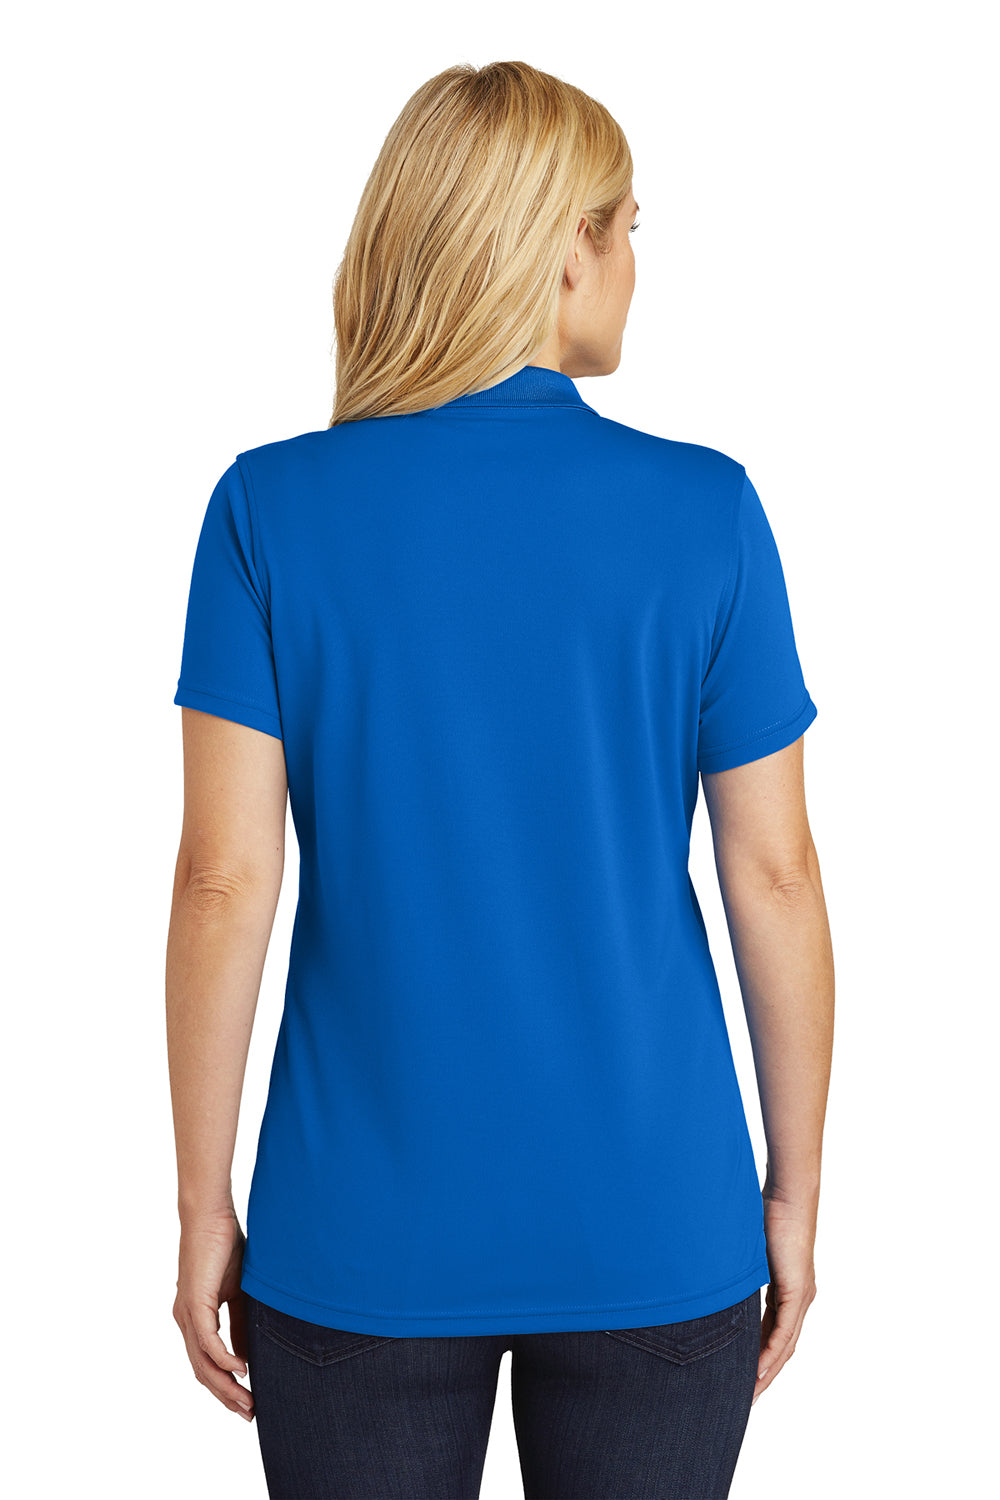 Port Authority LK110 Womens Dry Zone Moisture Wicking Short Sleeve Polo Shirt Royal Blue Back